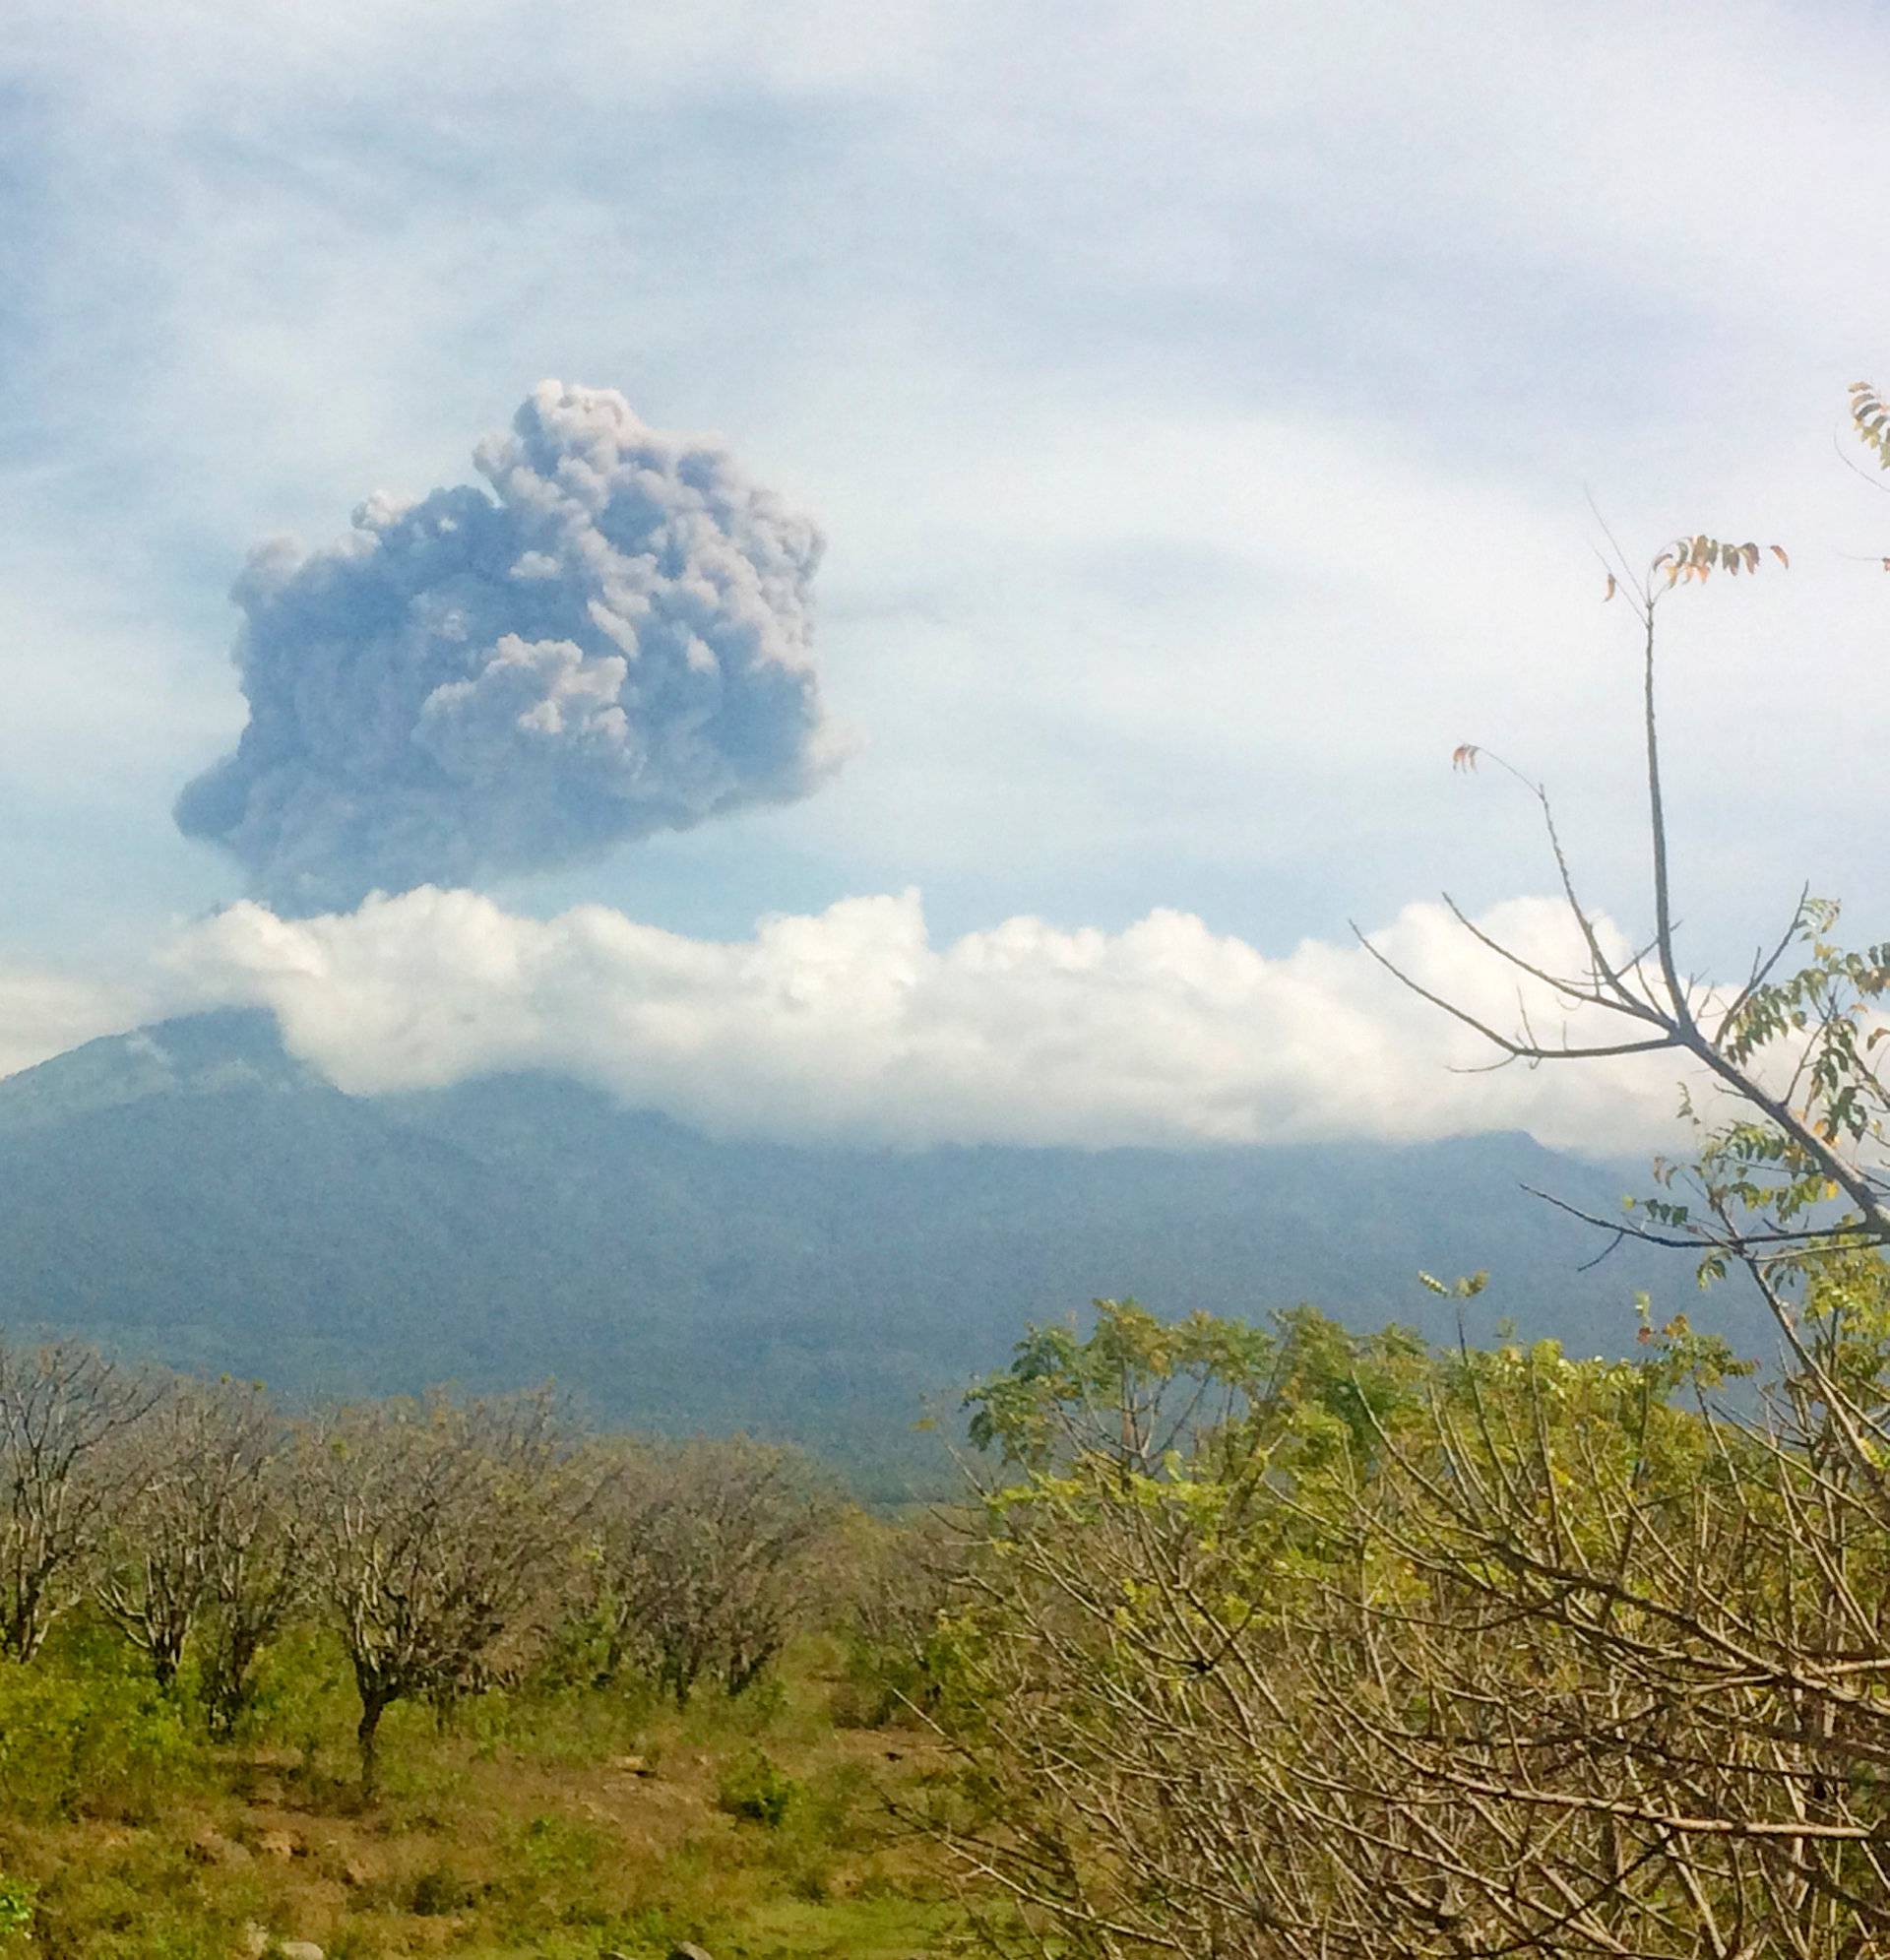 Mount Barujari, located inside Mount Rinjani volcano, is seen erupting from Bayan district, North Lombok, Indonesia 